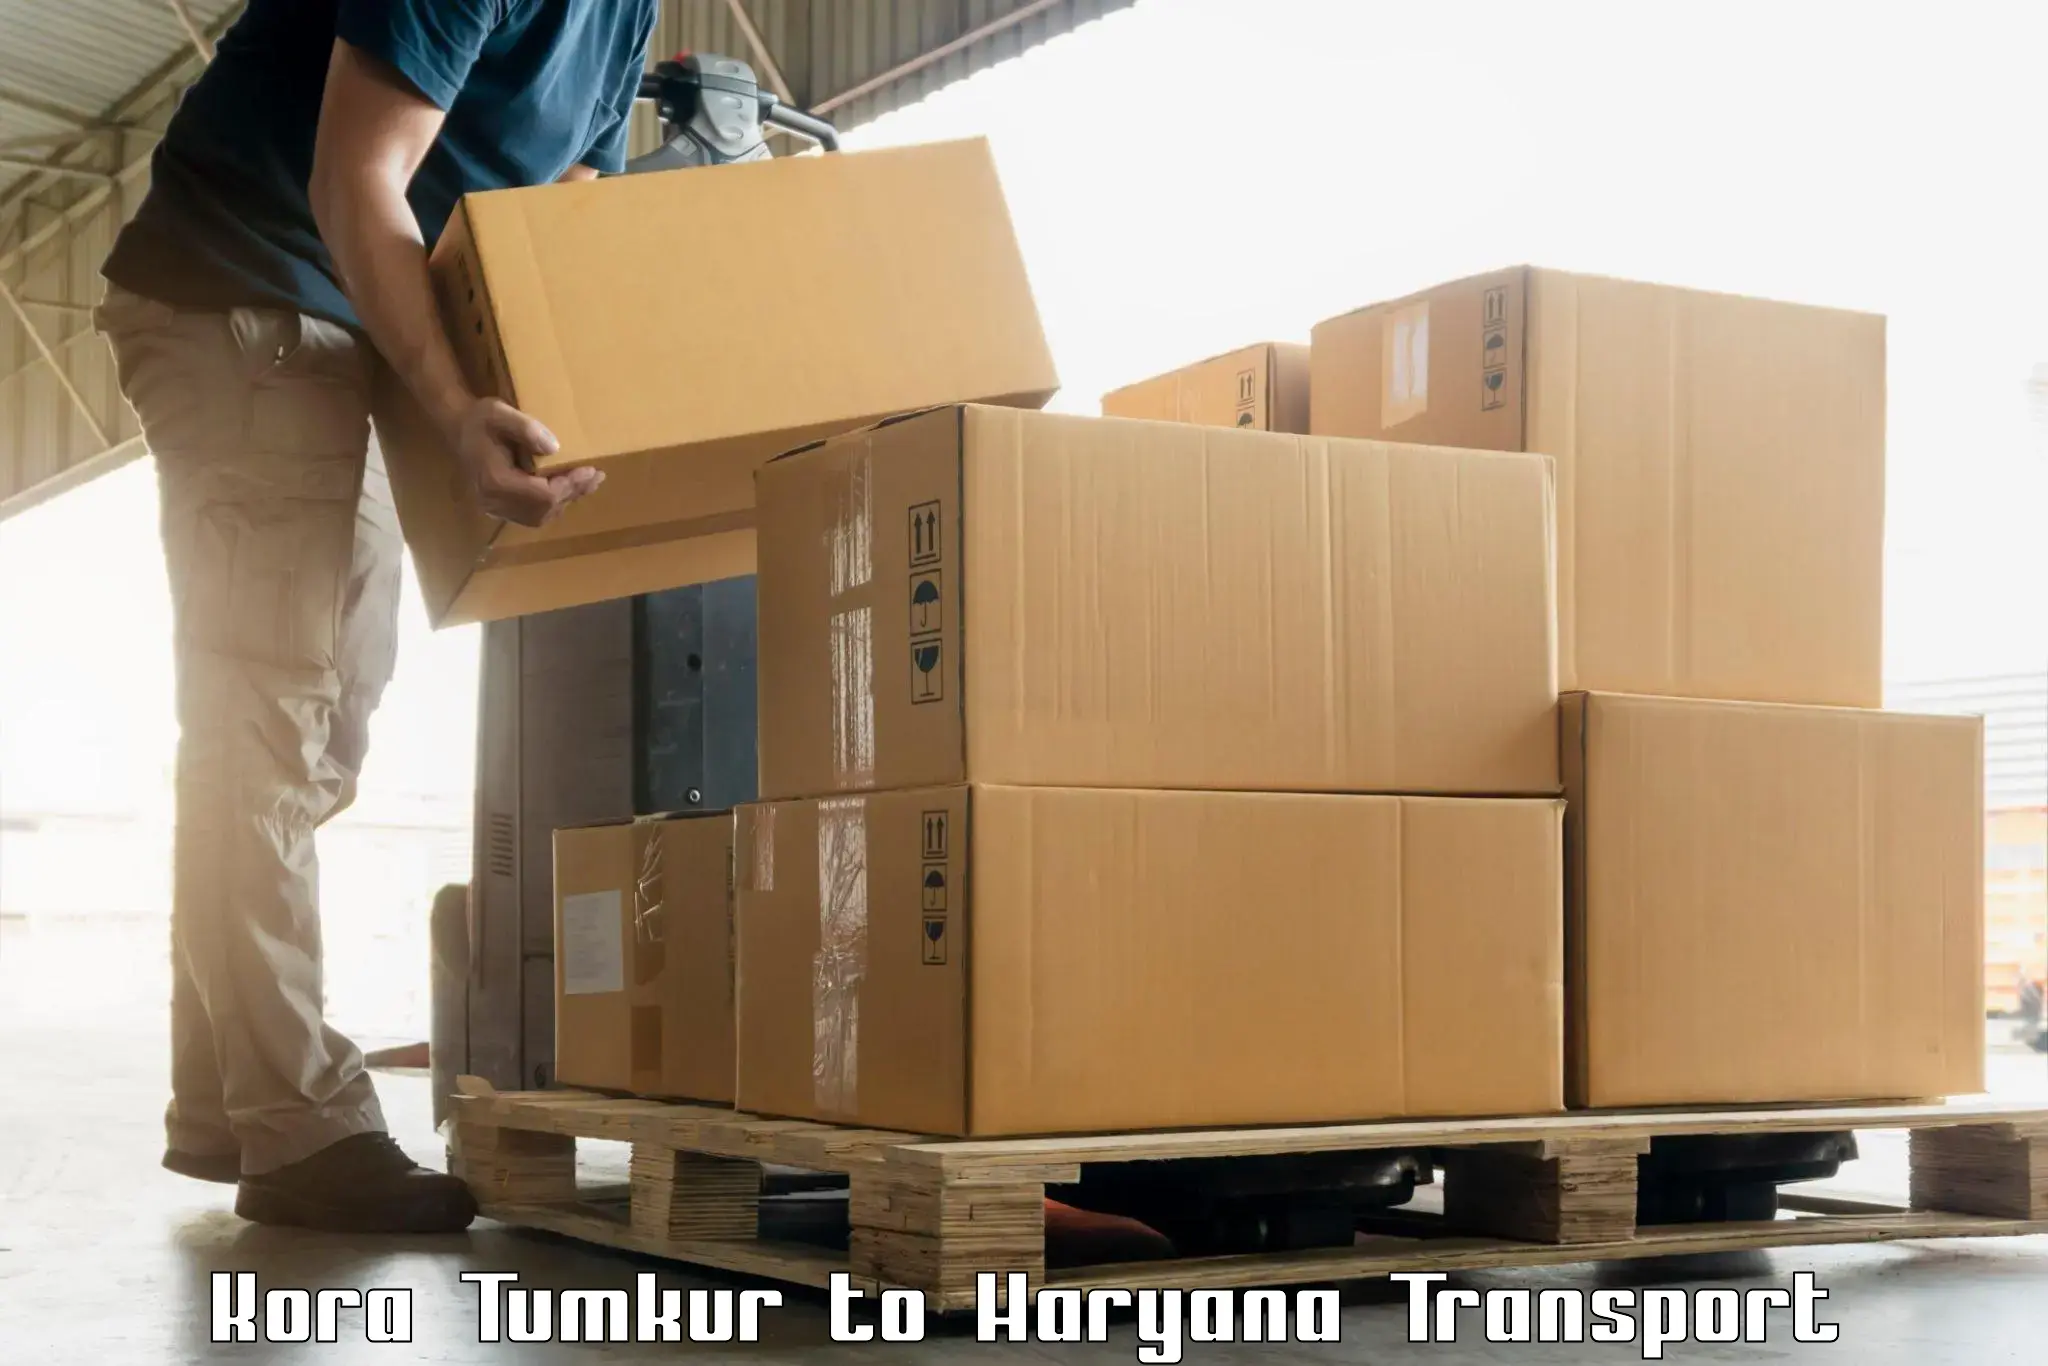 Two wheeler parcel service Kora Tumkur to Hisar